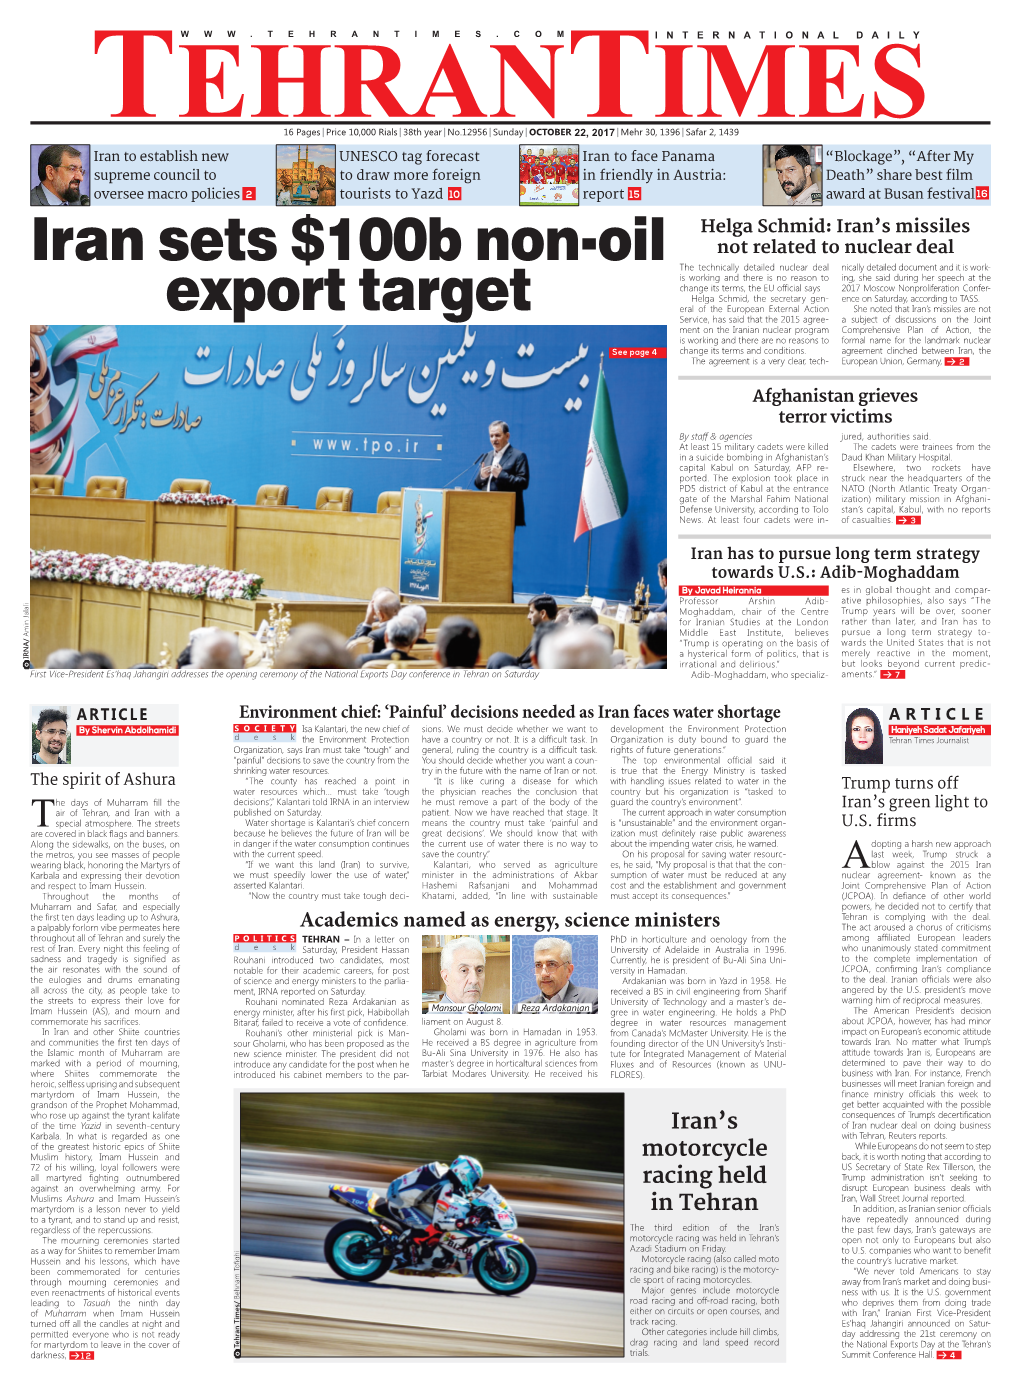 Iran Sets $100B Non-Oil Export Target